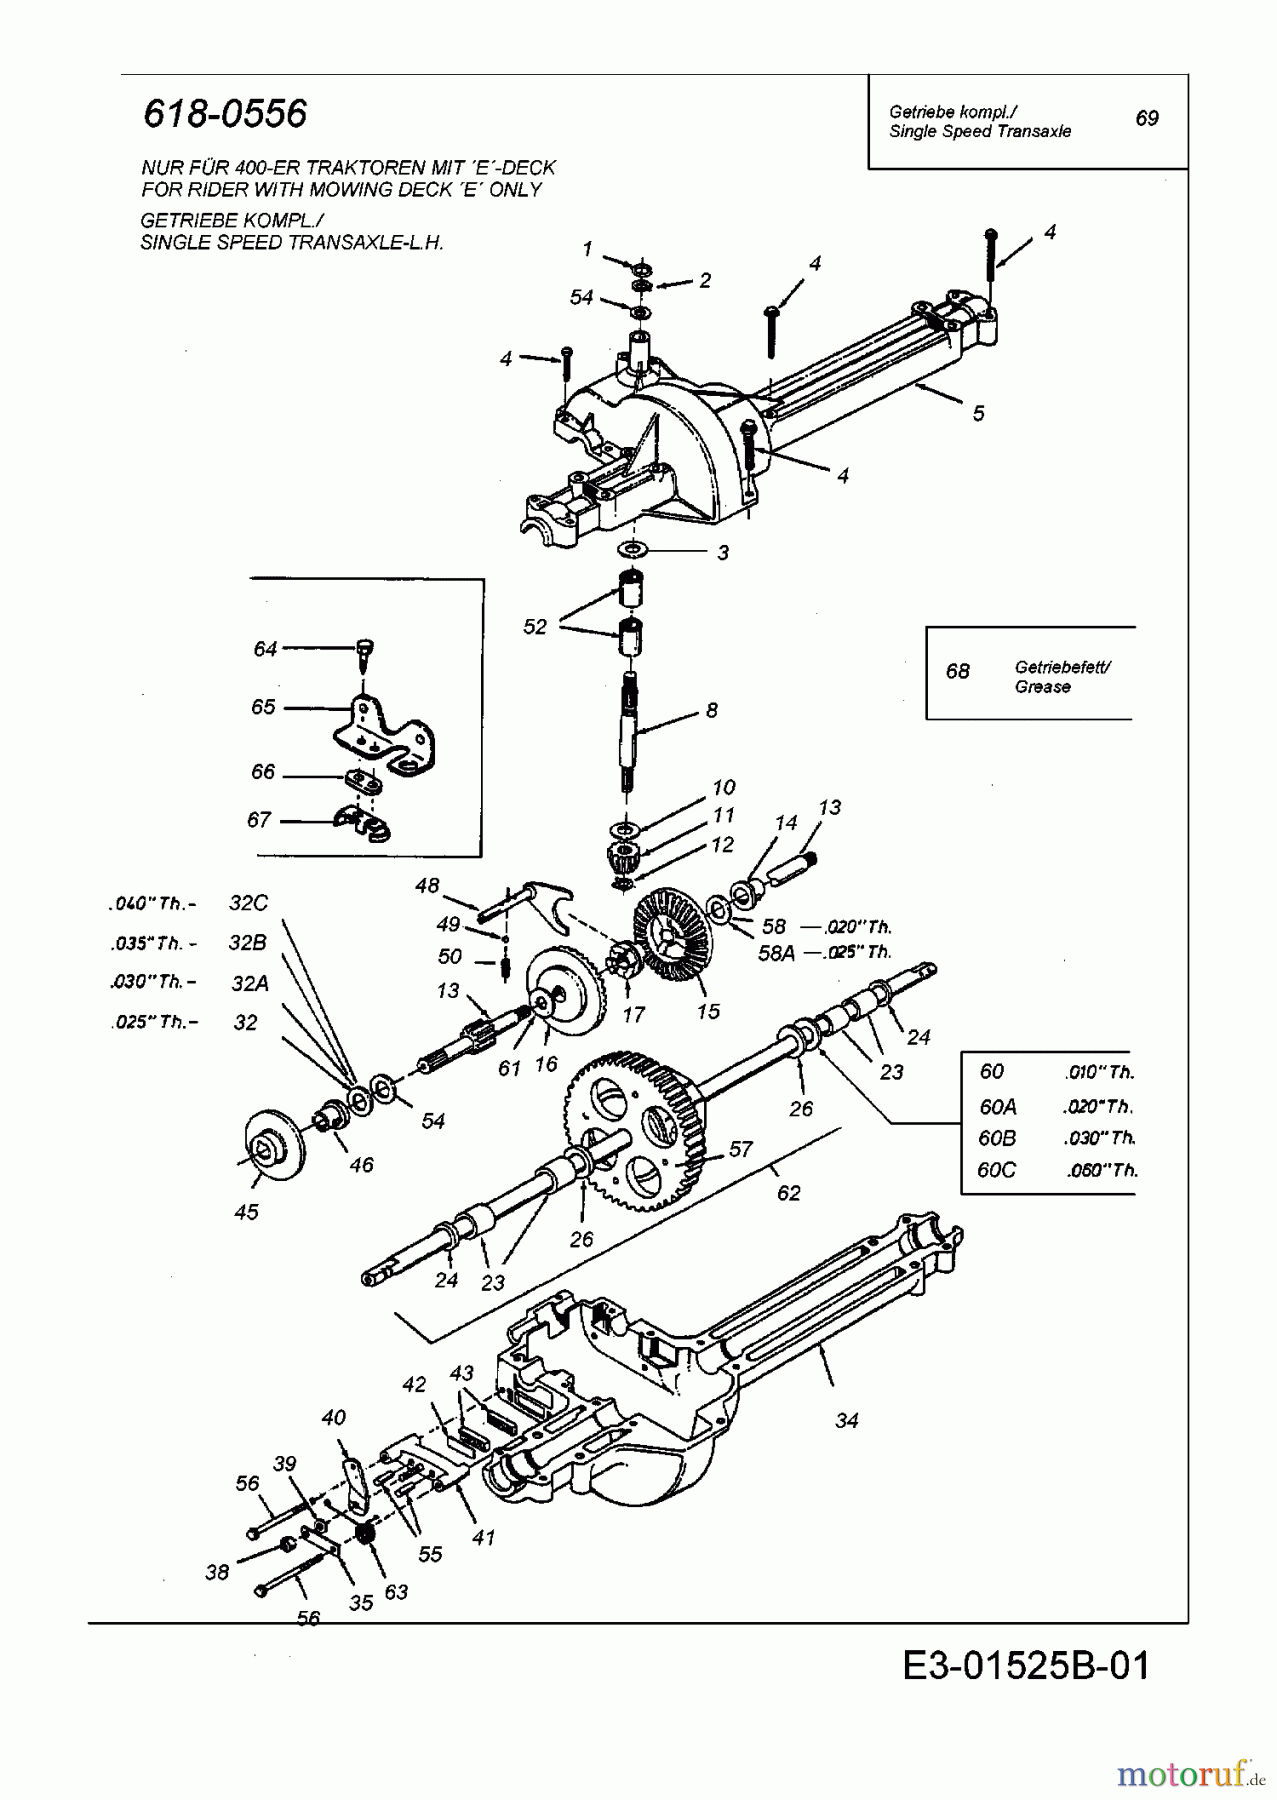  Edt Rasentraktoren EDT 130-92 13AA473E610  (2000) Getriebe 618-0556